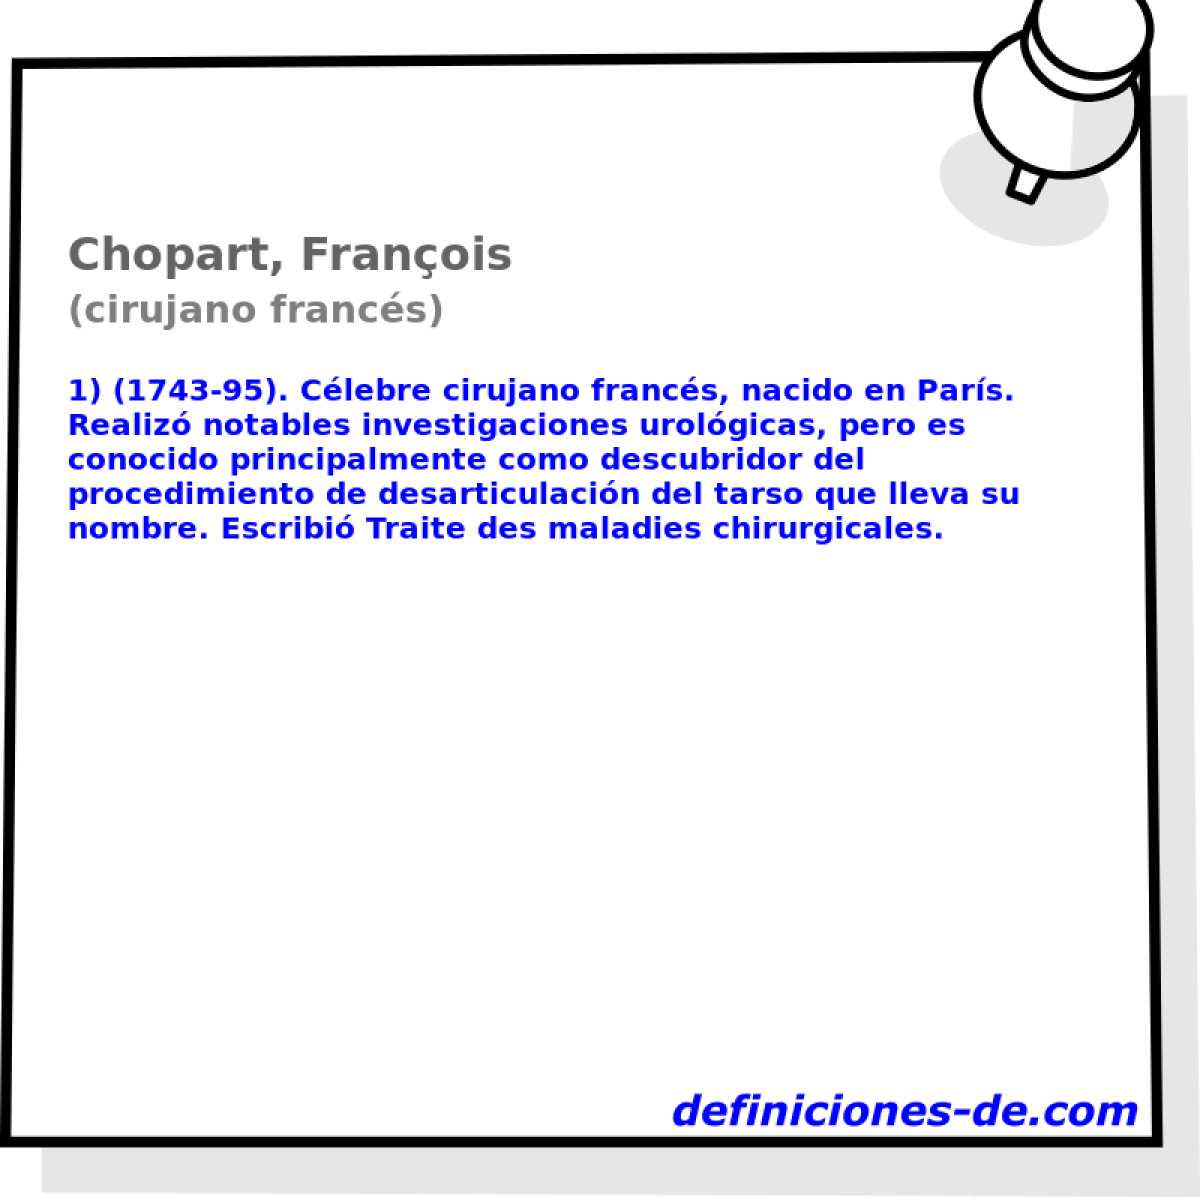 Chopart, Franois (cirujano francs)